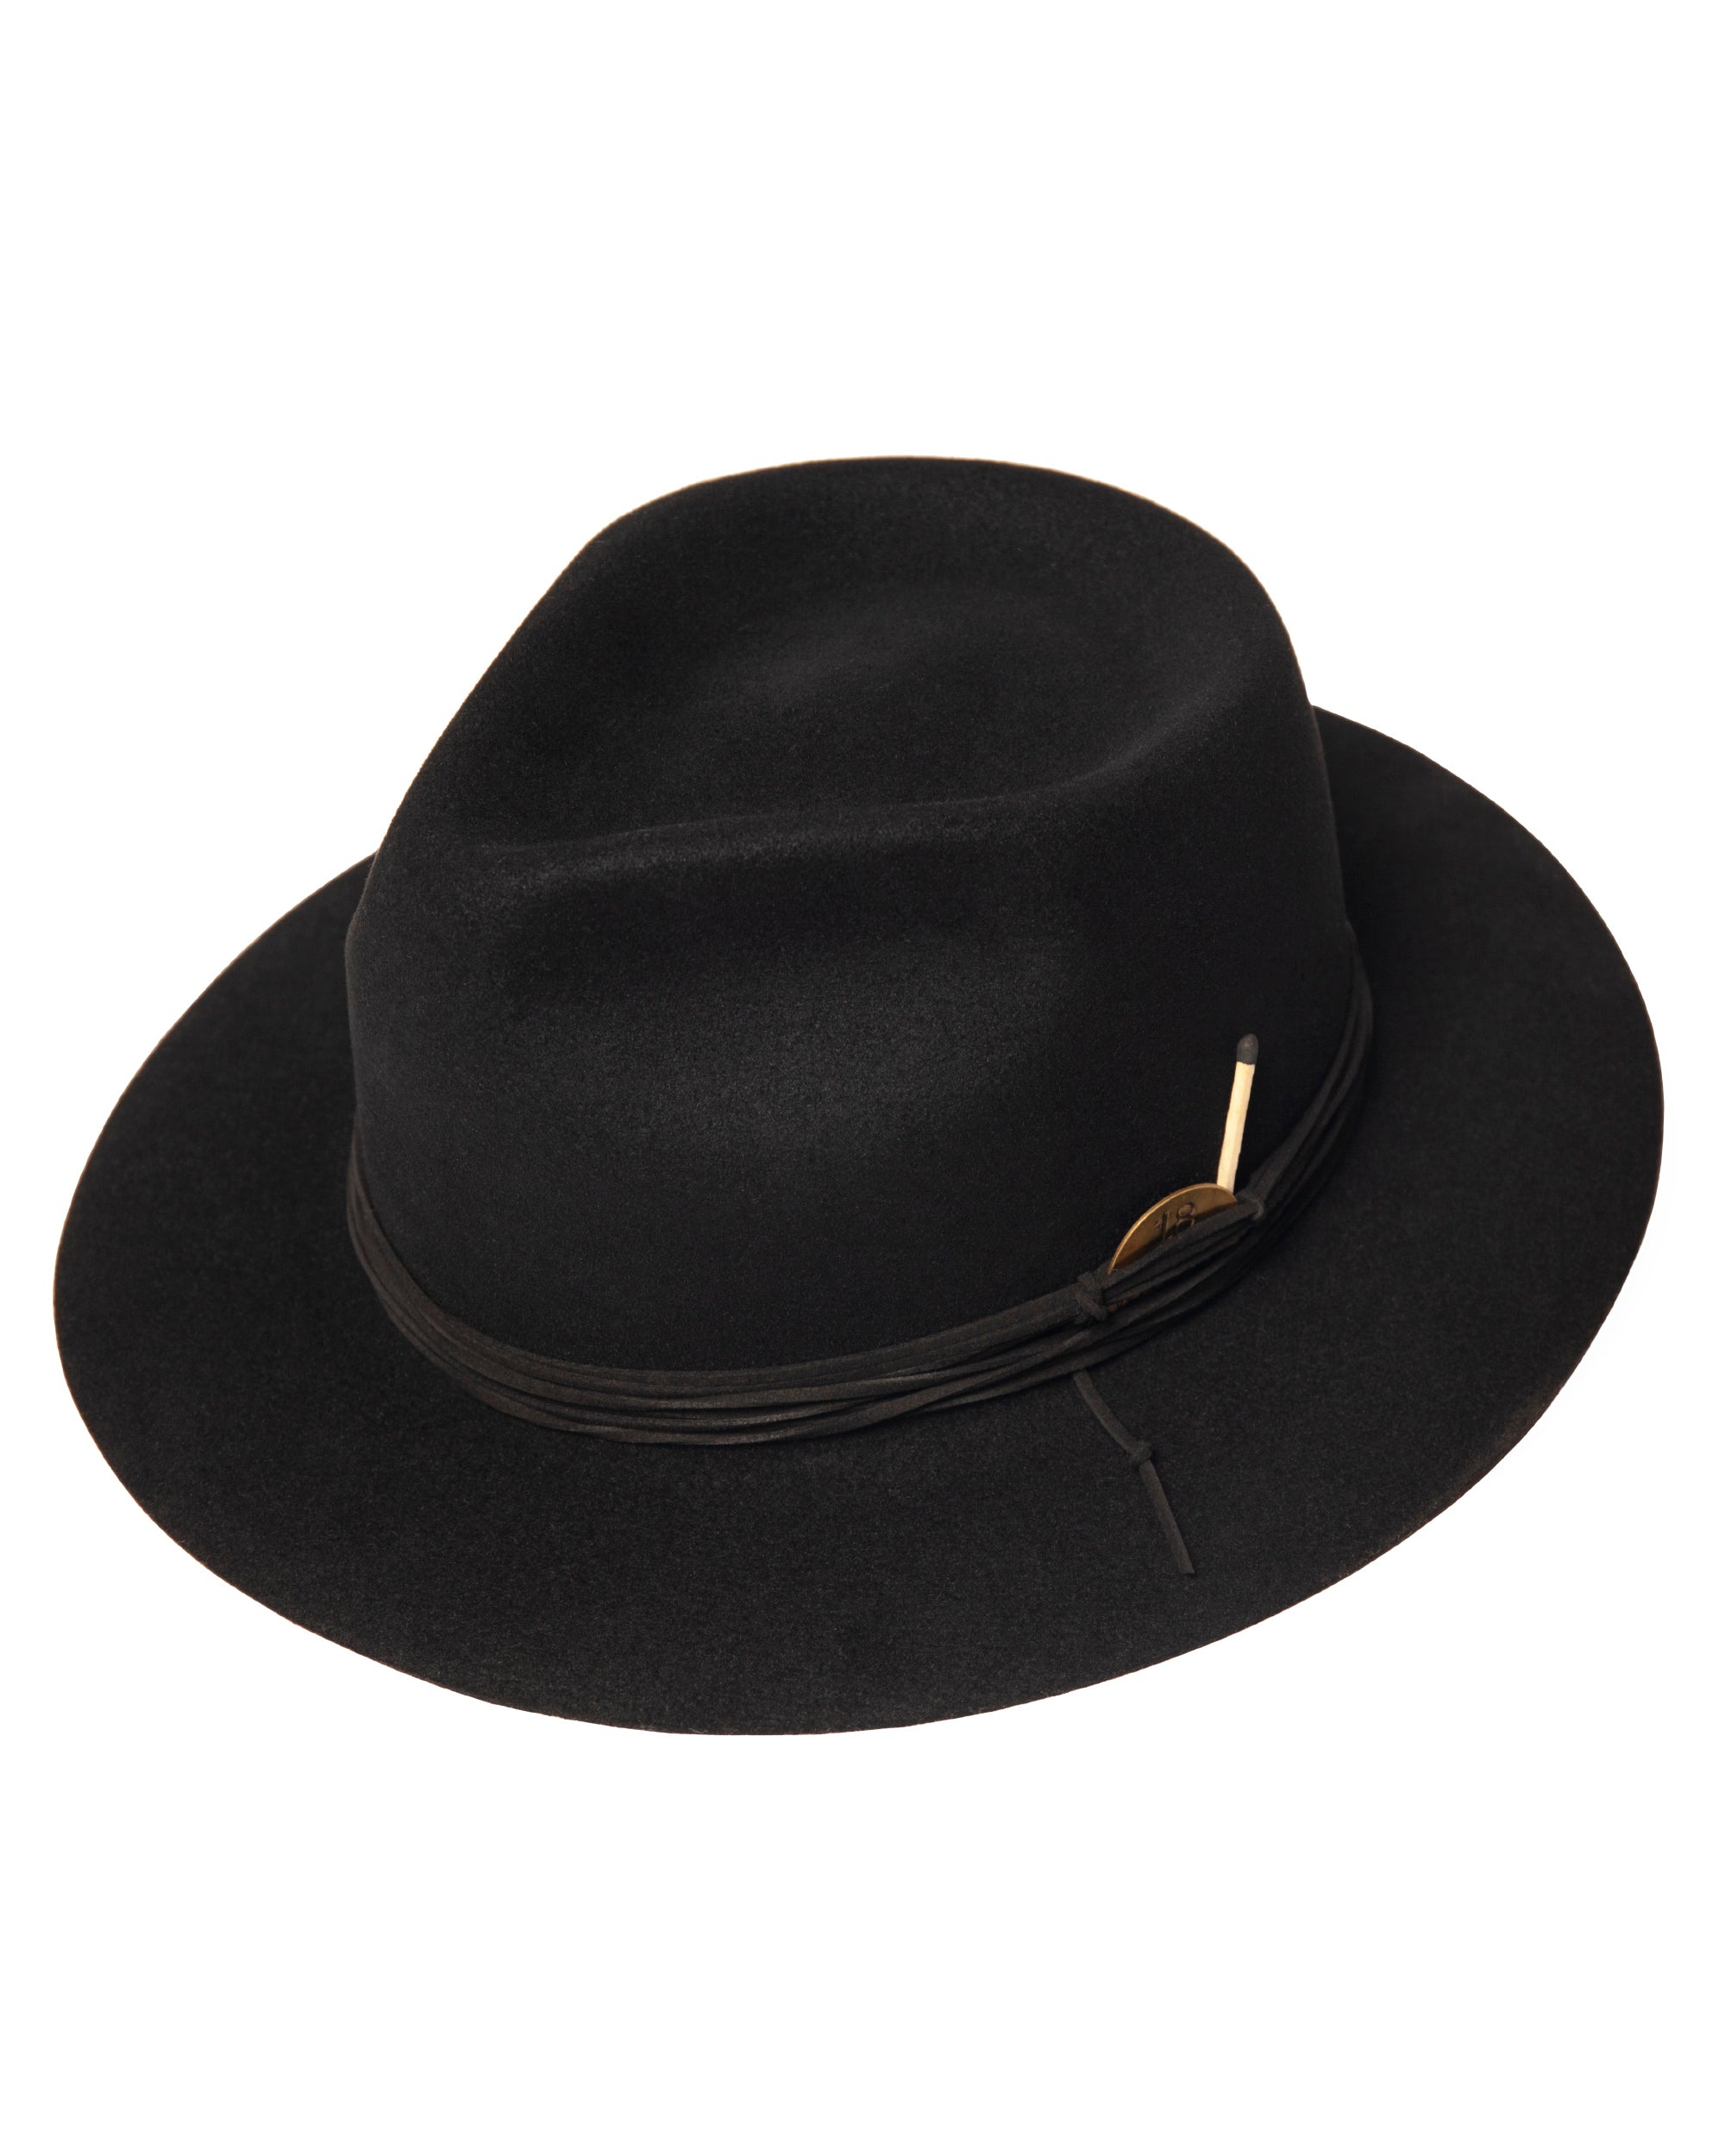 The Jackson Hat